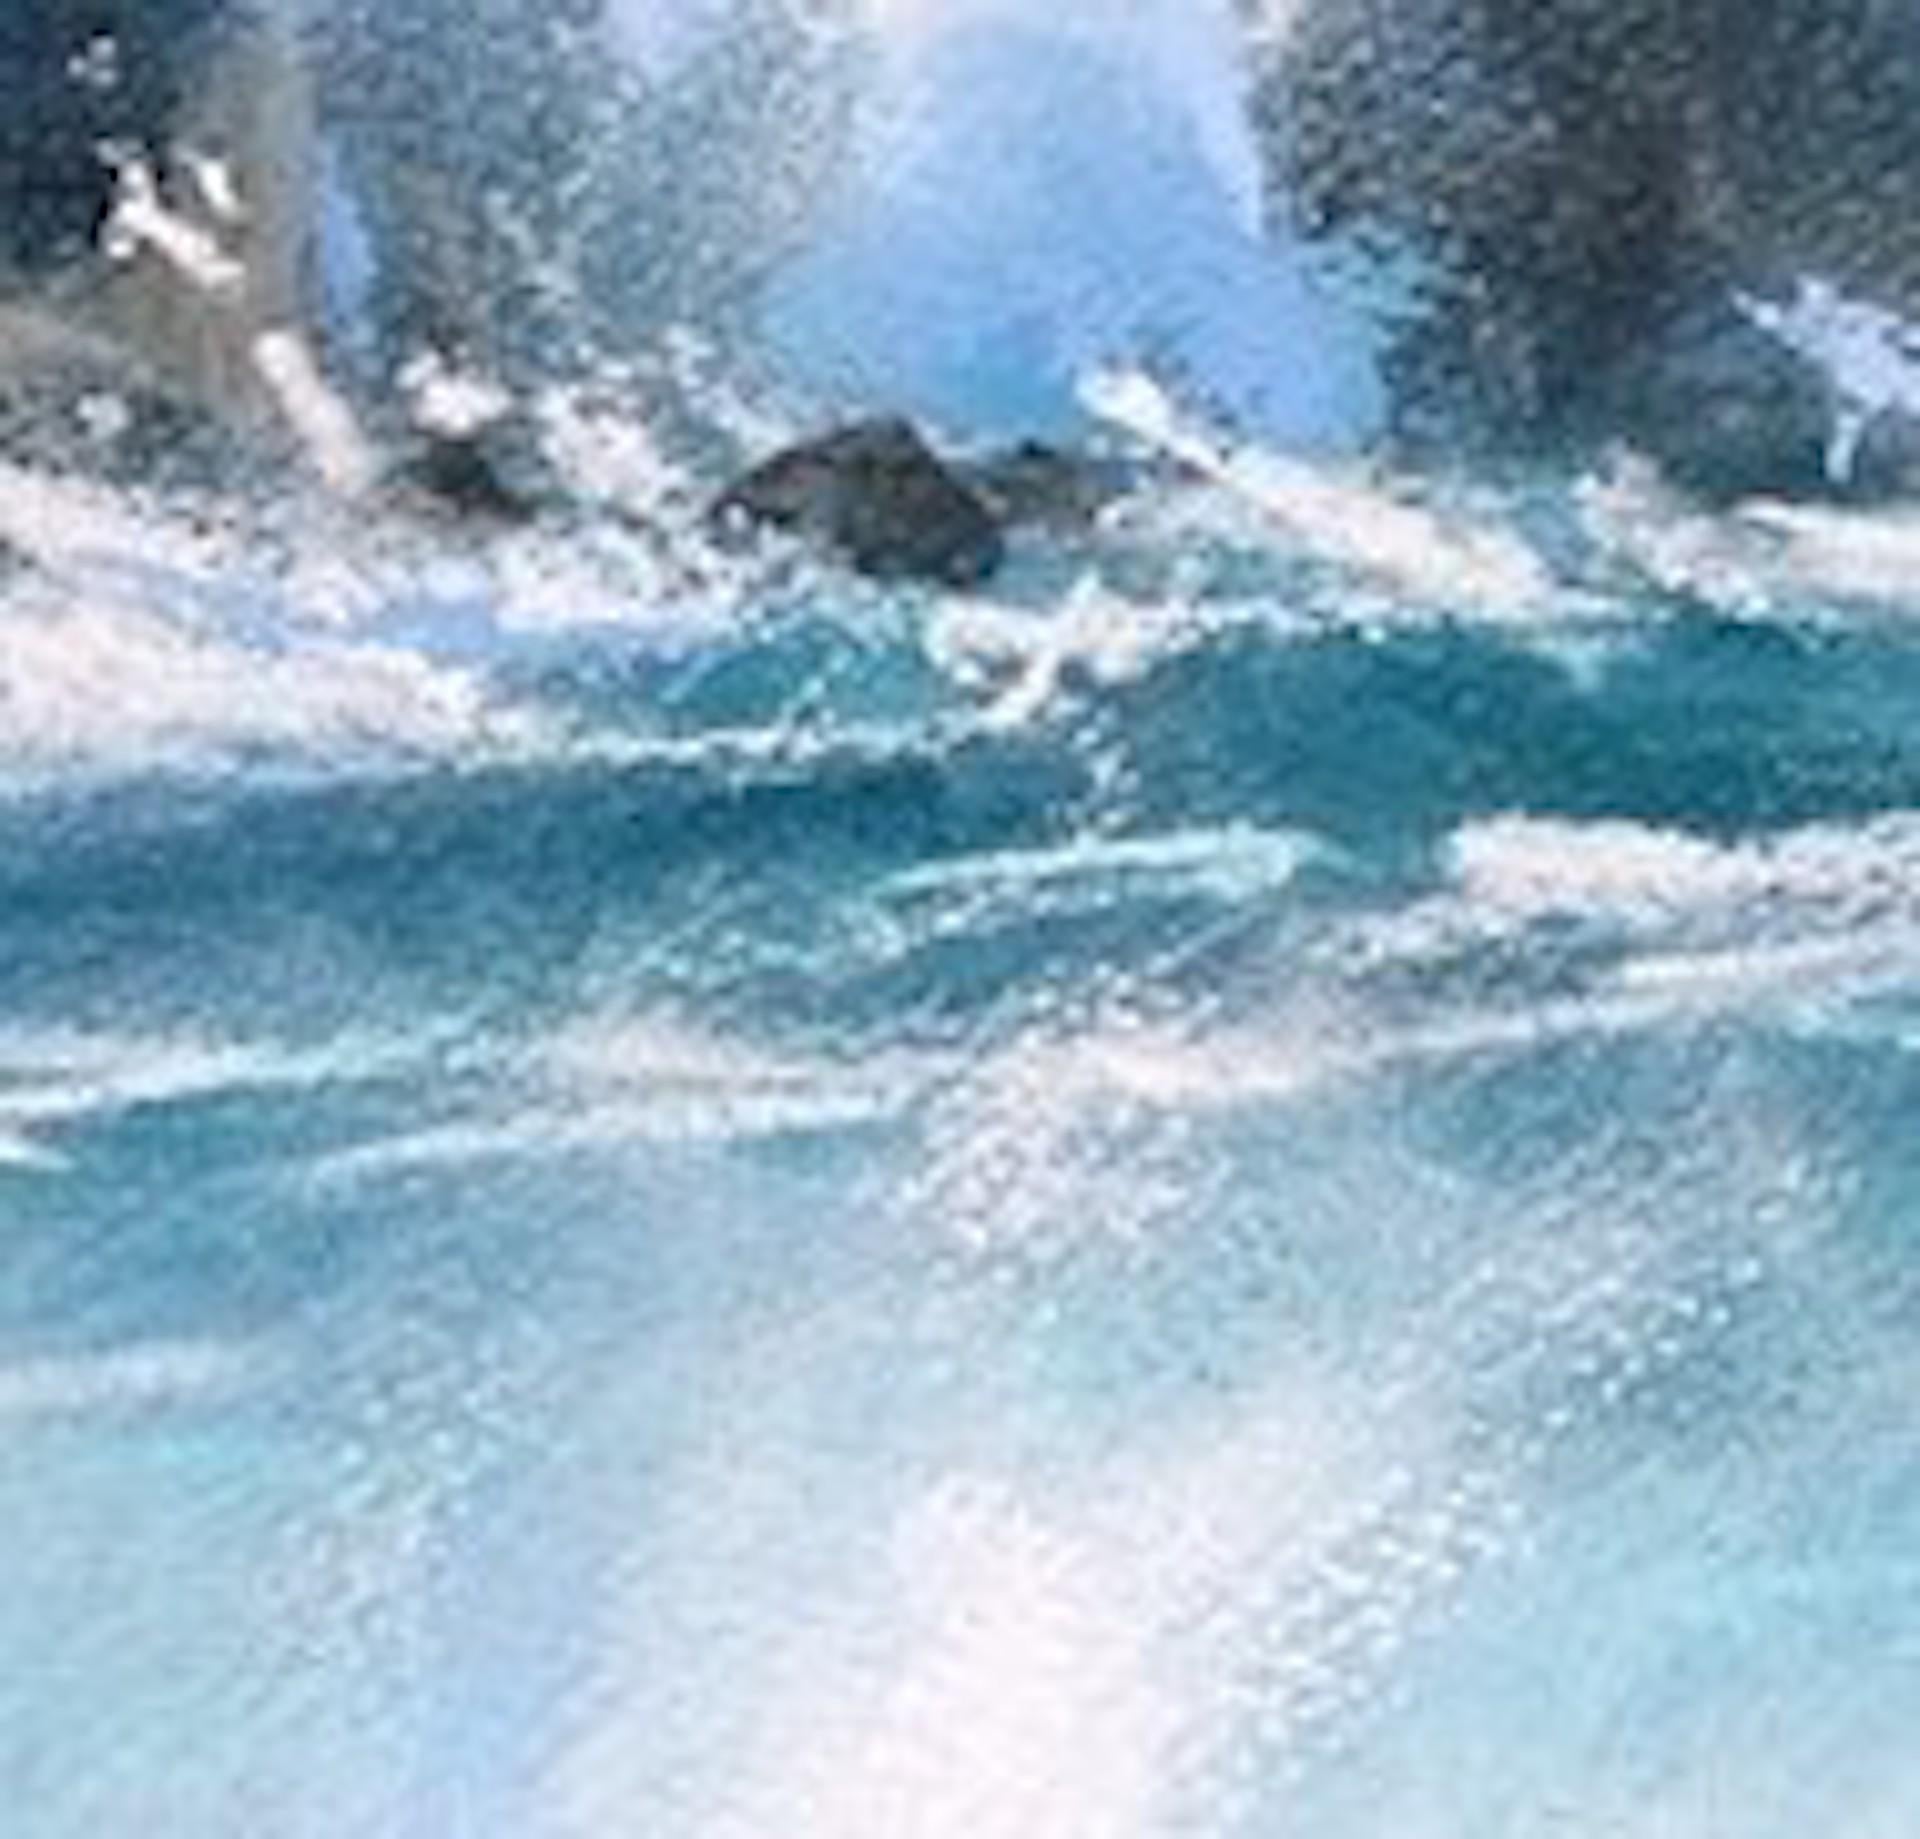 James Bartholomew
Westerly Squall
Limited Edition Giclee Print of 195
Image size: H 50cm (20″) x W 39 cm(15.5″)
Signed by the artist

Westerly Squall is a limited edition giclee print by James Bartholomew. The piece depicts foaming waves crashing